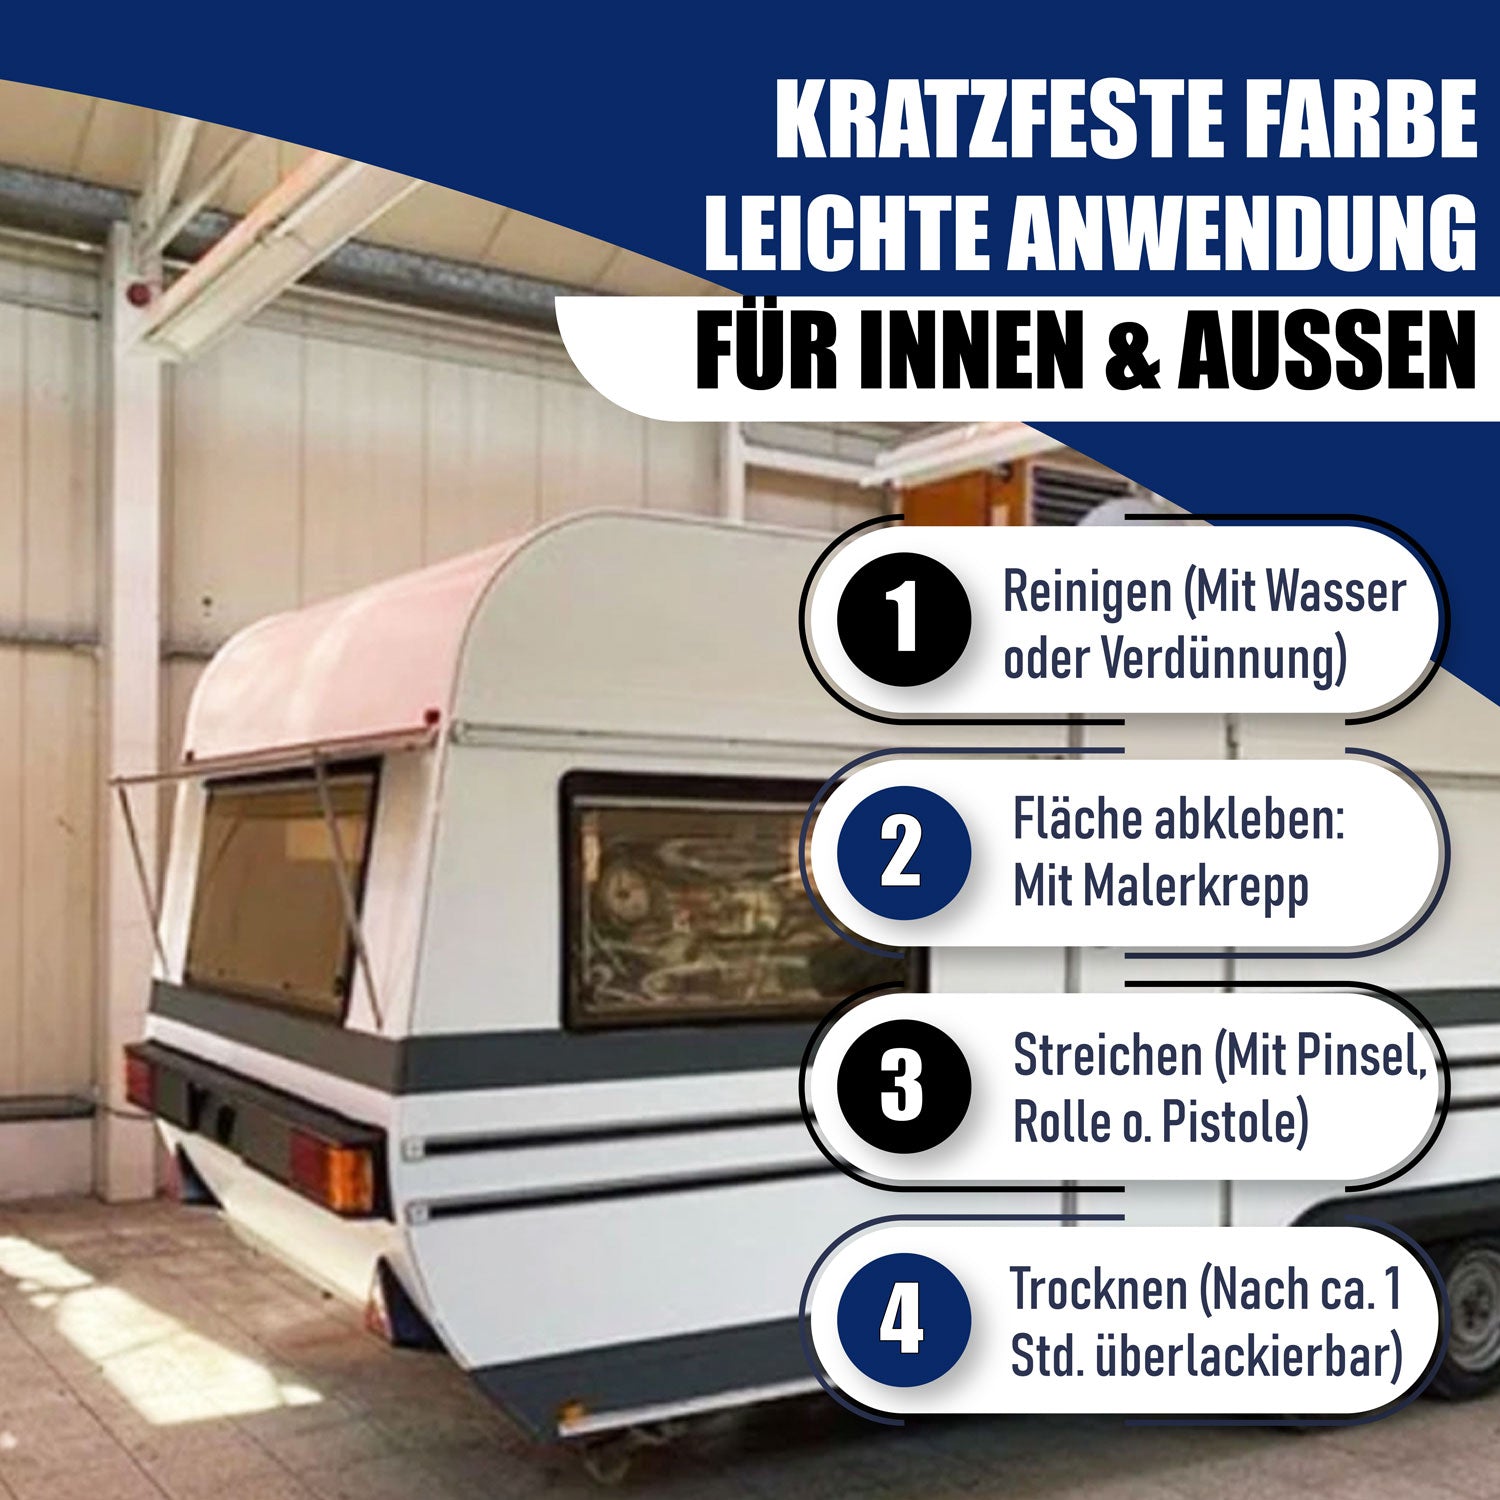 Hamburger Lack-Profi 2K Autolack in Basaltgrau RAL 7012 mit Lackierset (X300) & Verdünnung (1 L) - 30% Sparangebot